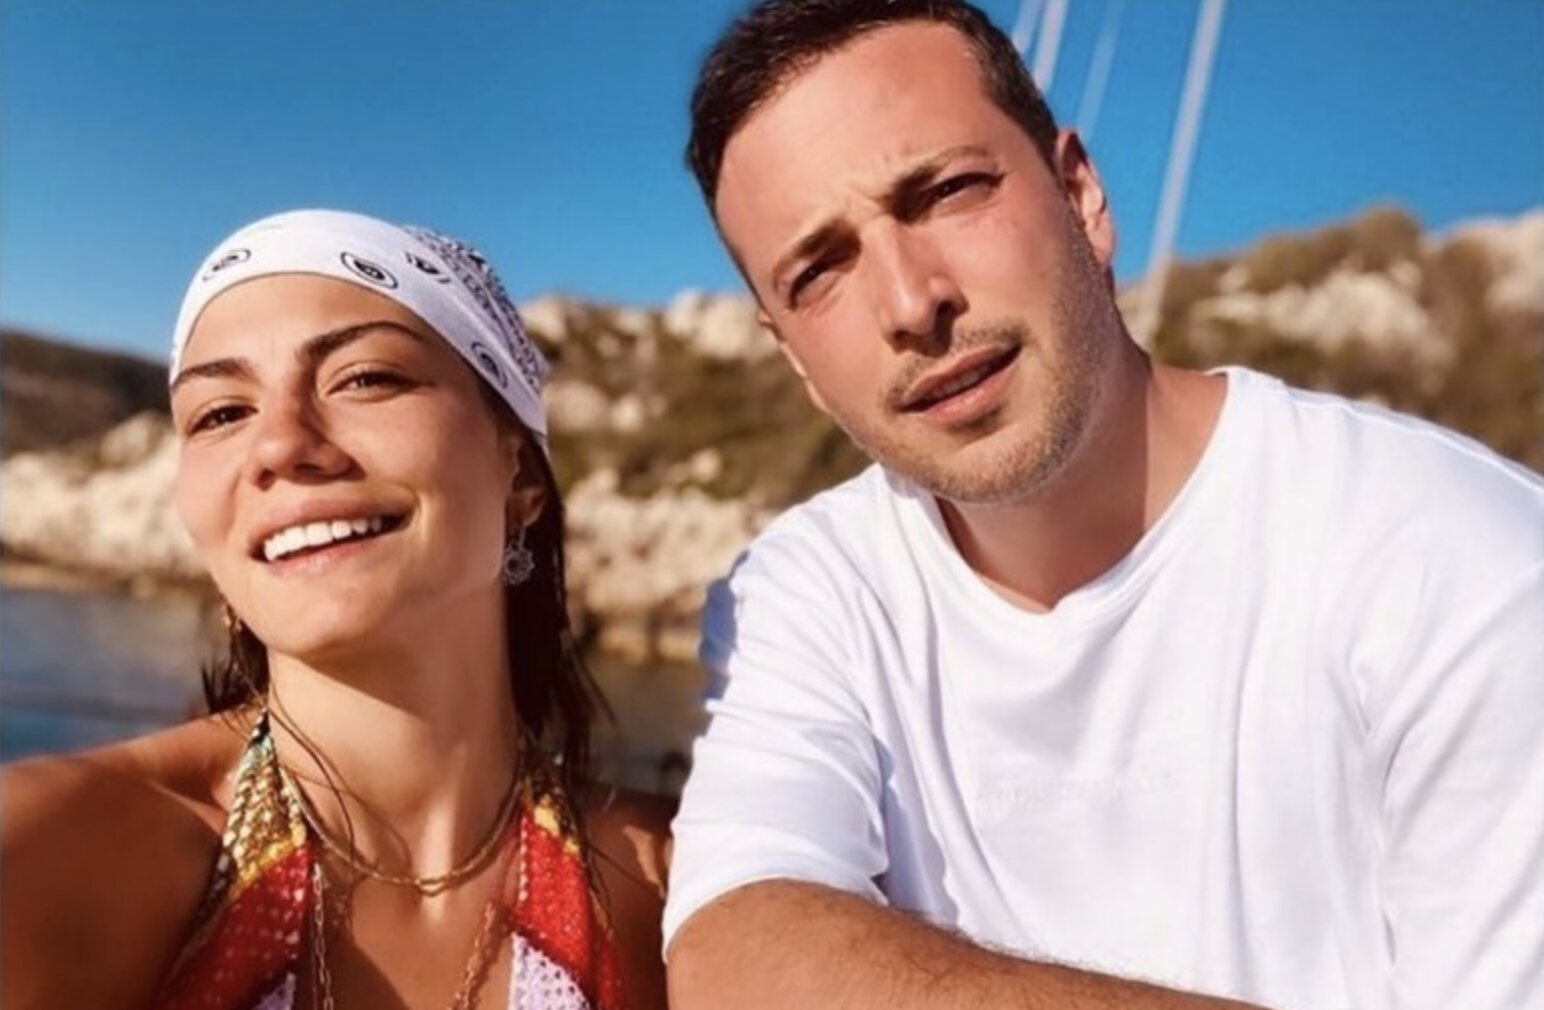 Demet Özdemir y Oguzhan Koç de vacaciones/ Foto: Instagram